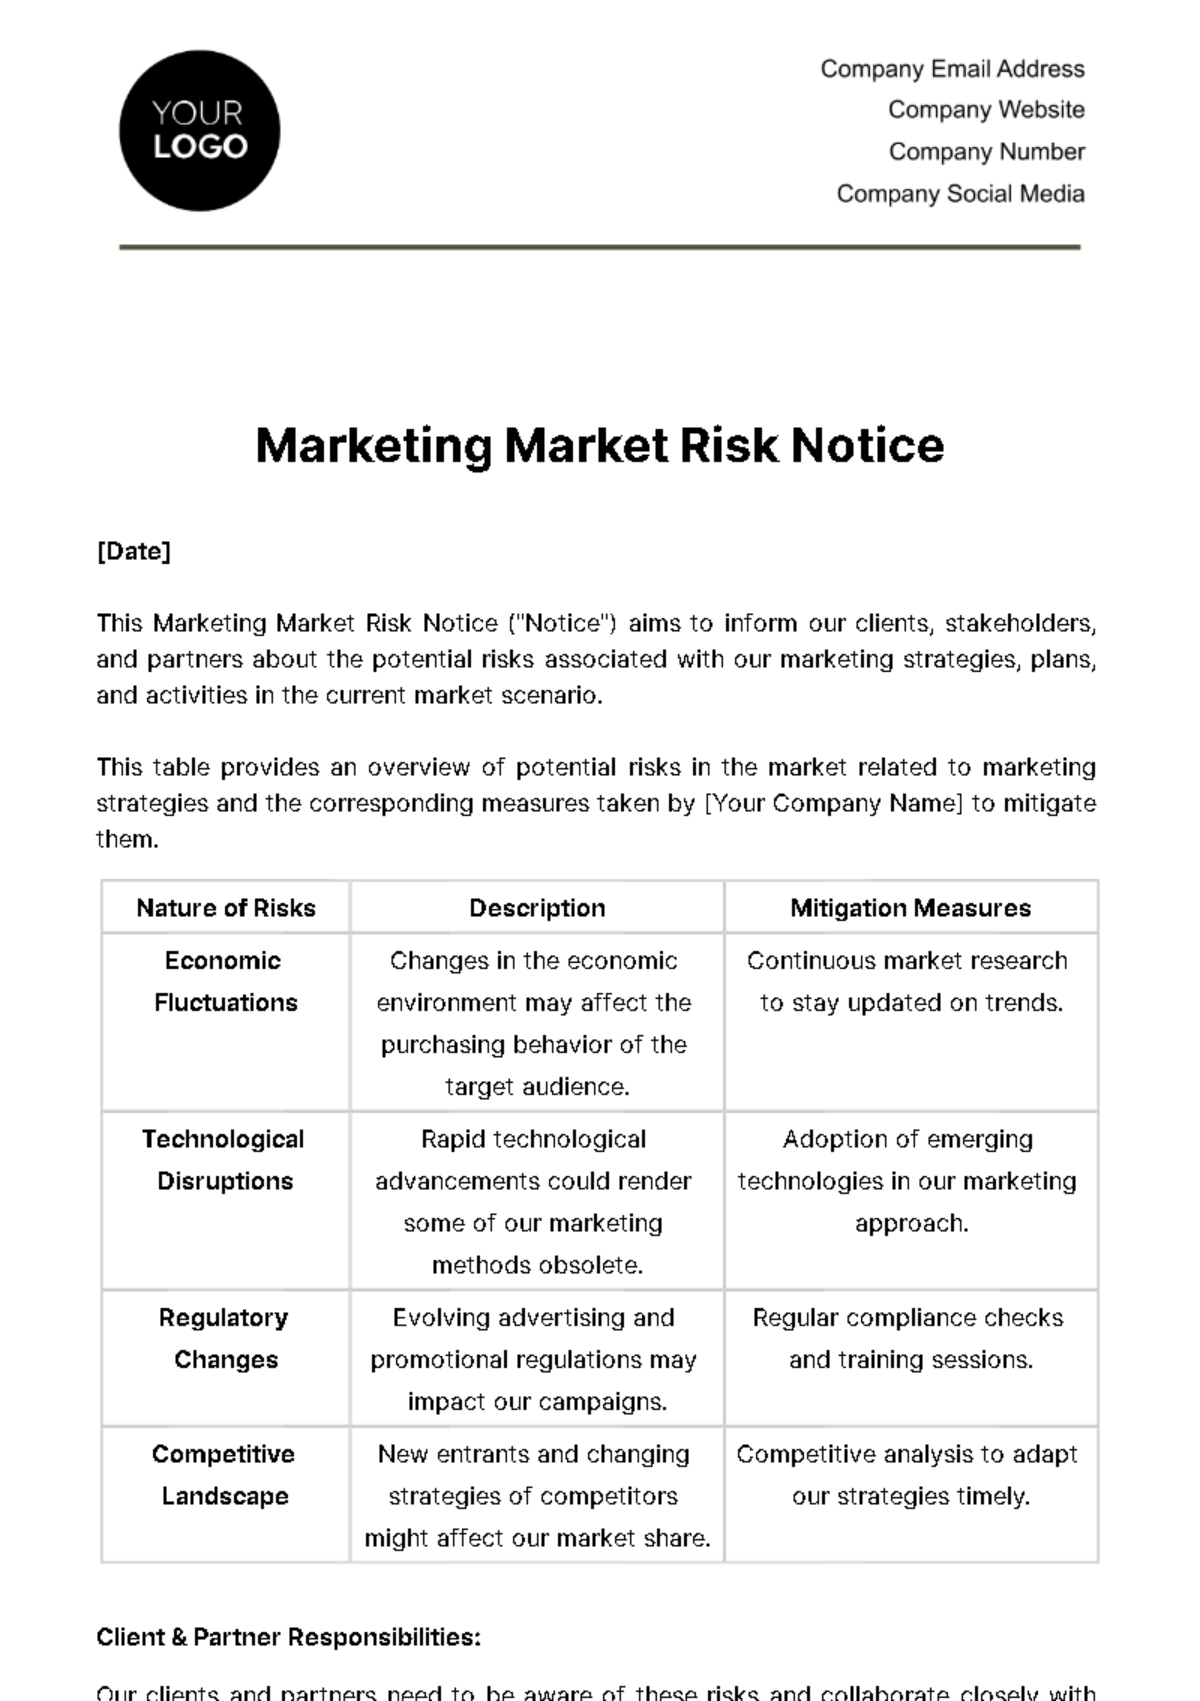 Free Marketing Market Risk Notice Template